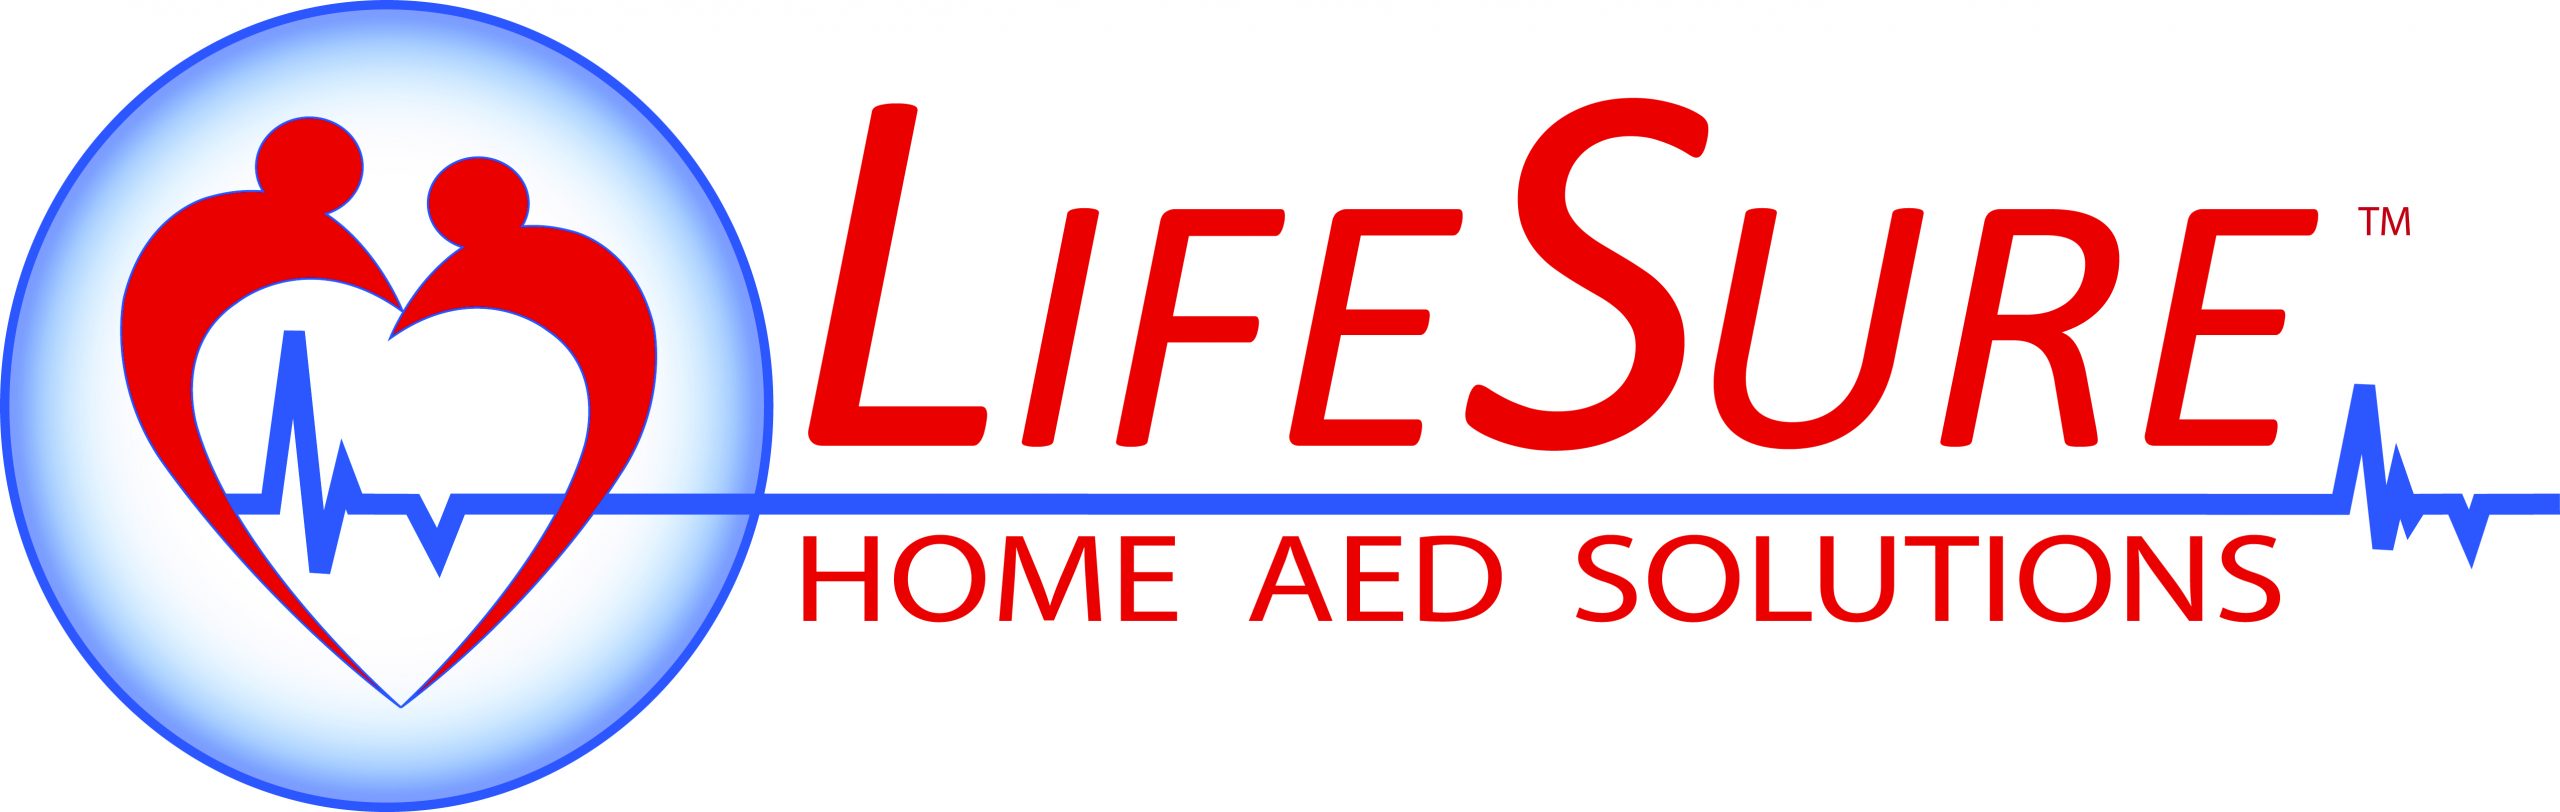 LifeSure Logo with TM scaled - Homepage